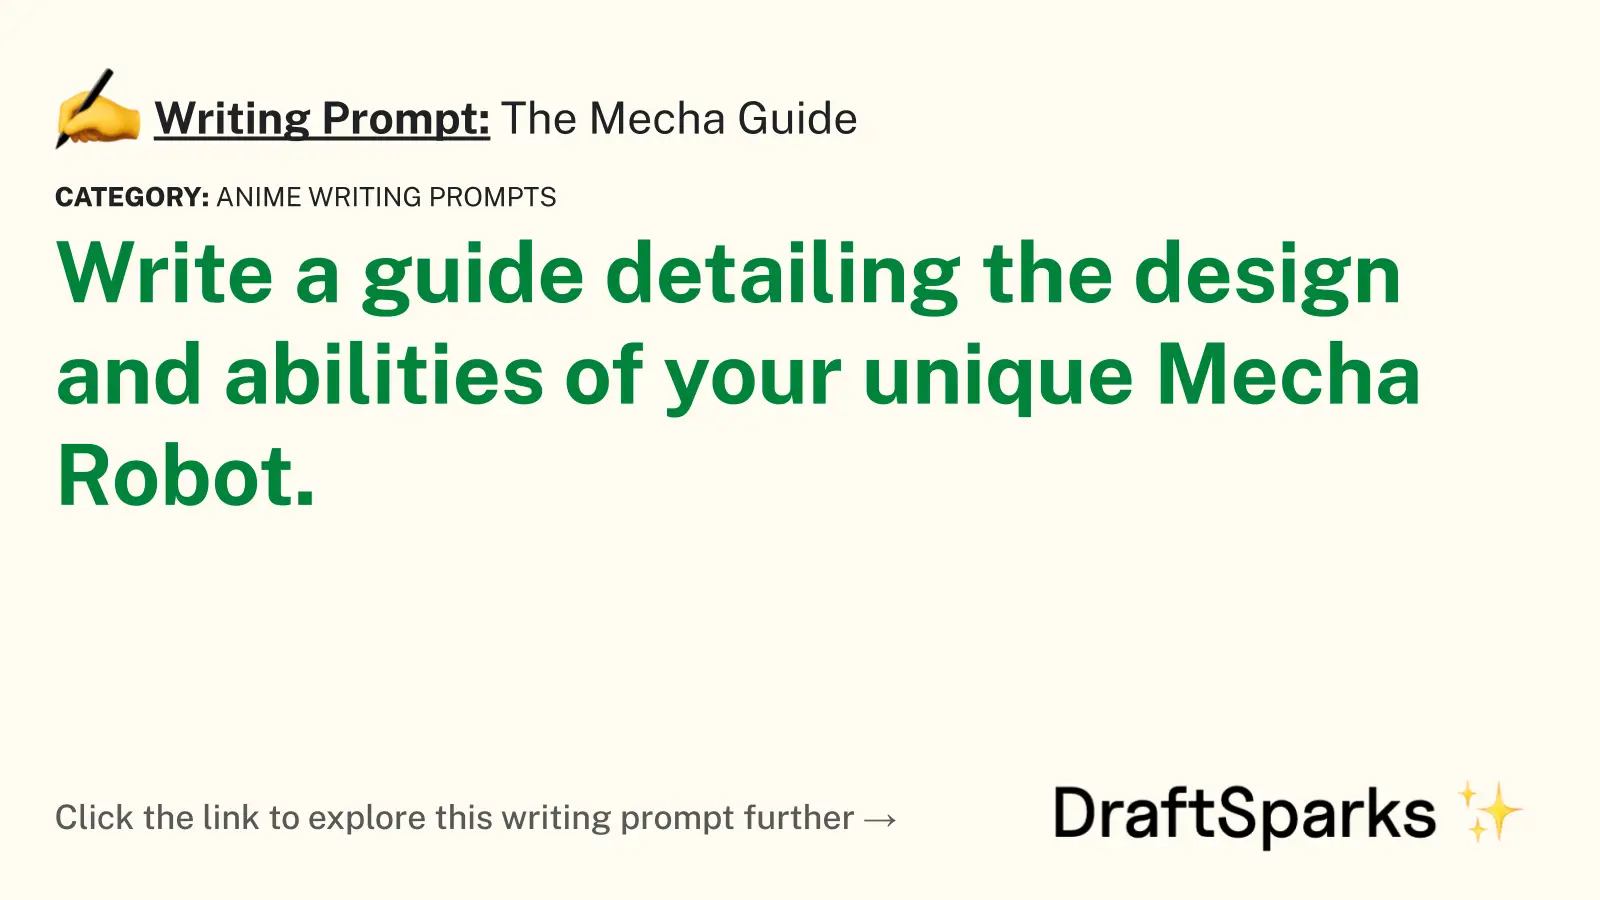 The Mecha Guide